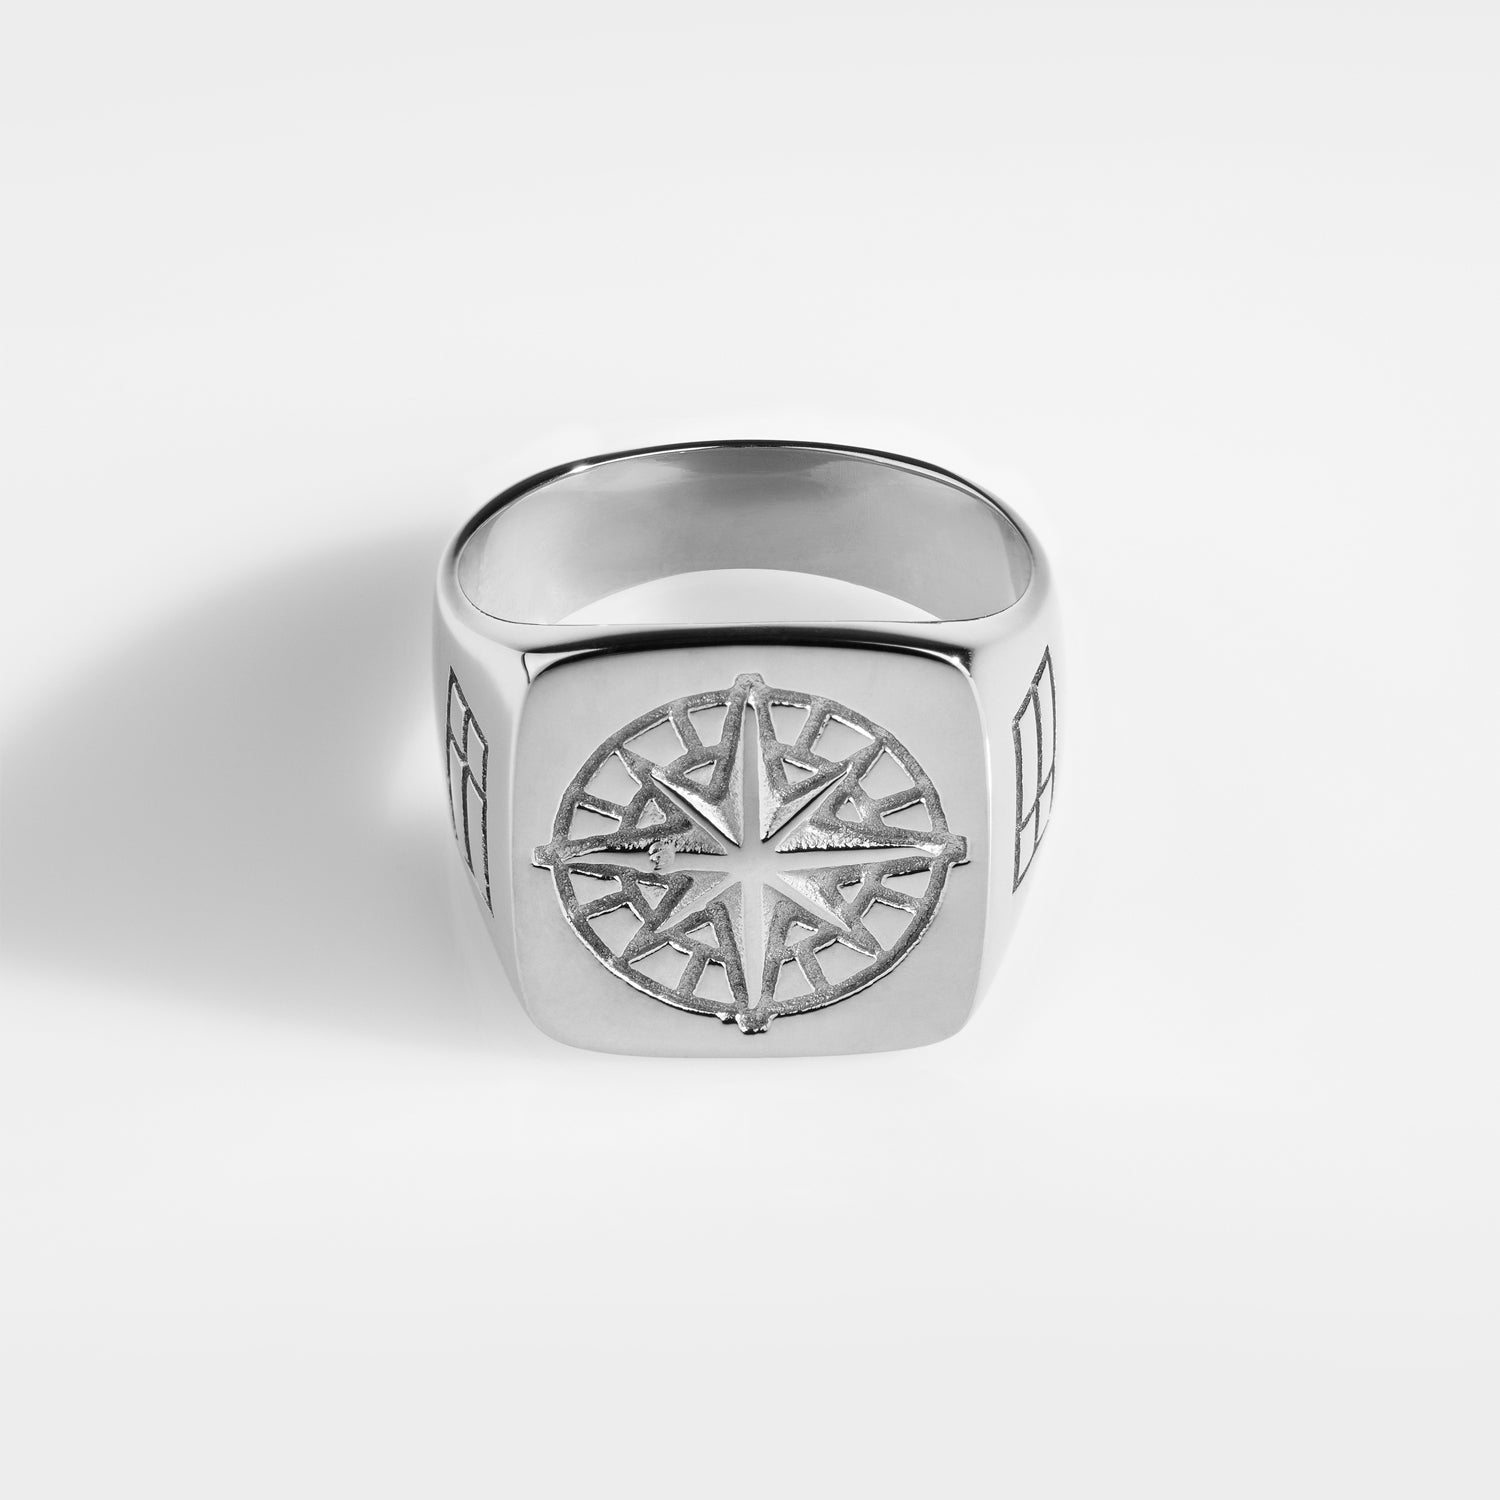 Compass Oversize Signature - Silver Tone Ring